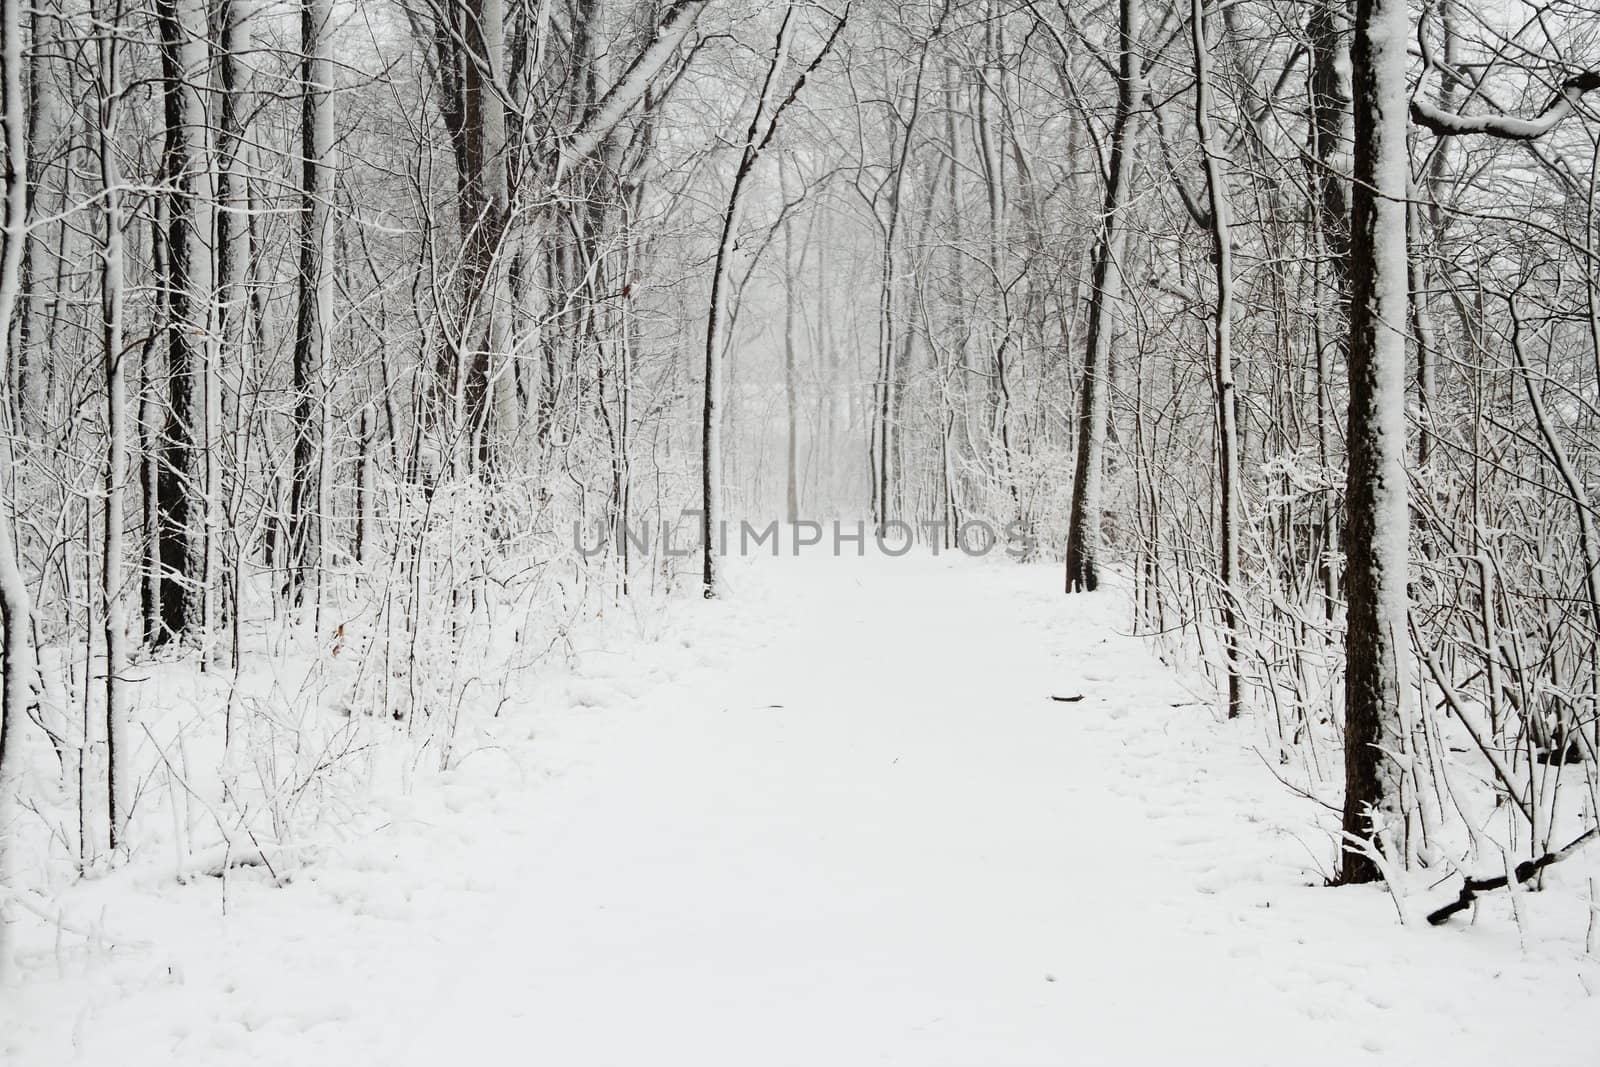 Snow Cover Trail by jasony00